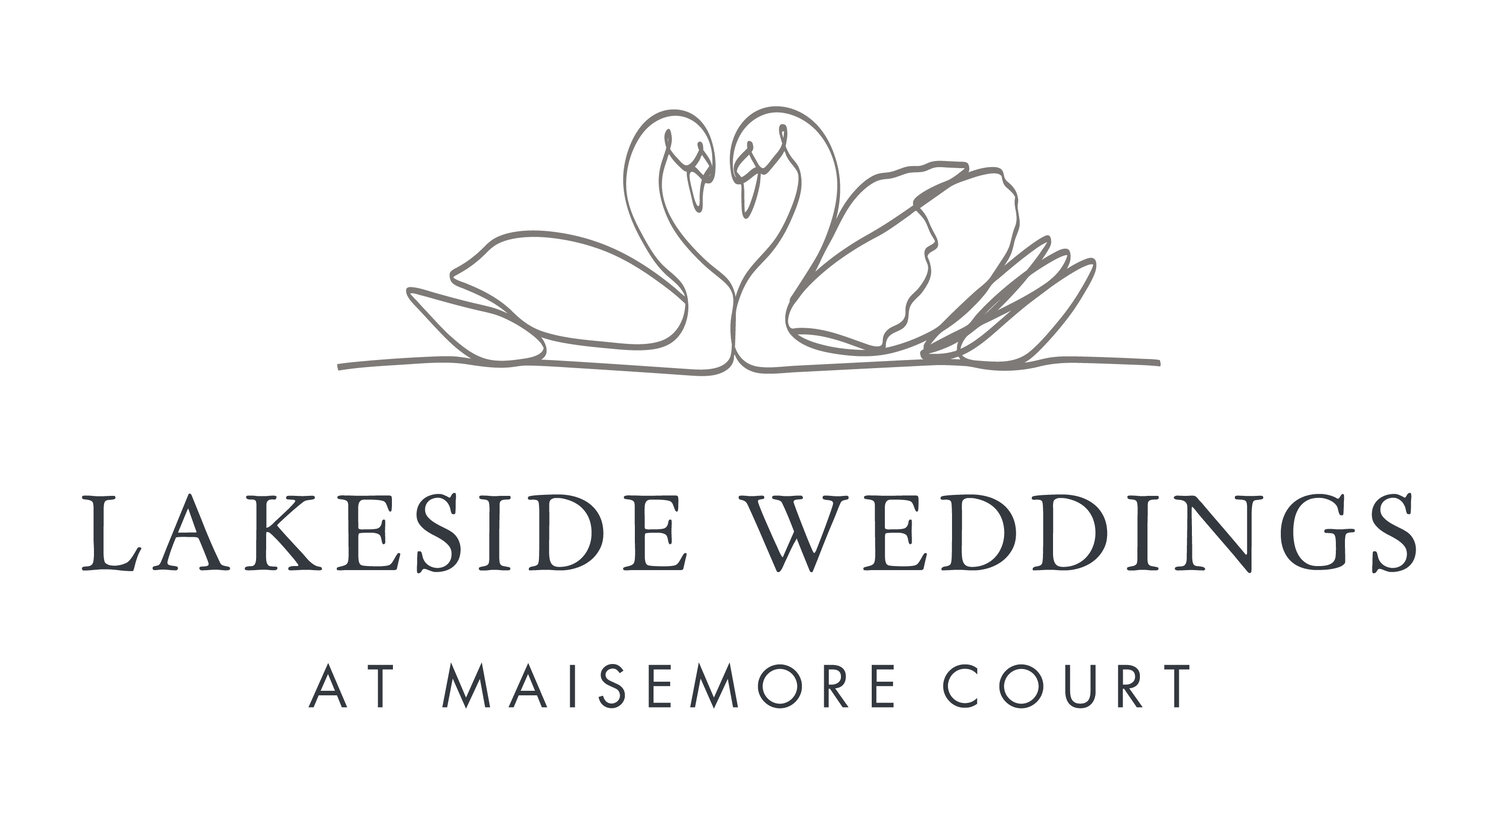 LAKESIDE WEDDINGS AT MAISEMORE COURT